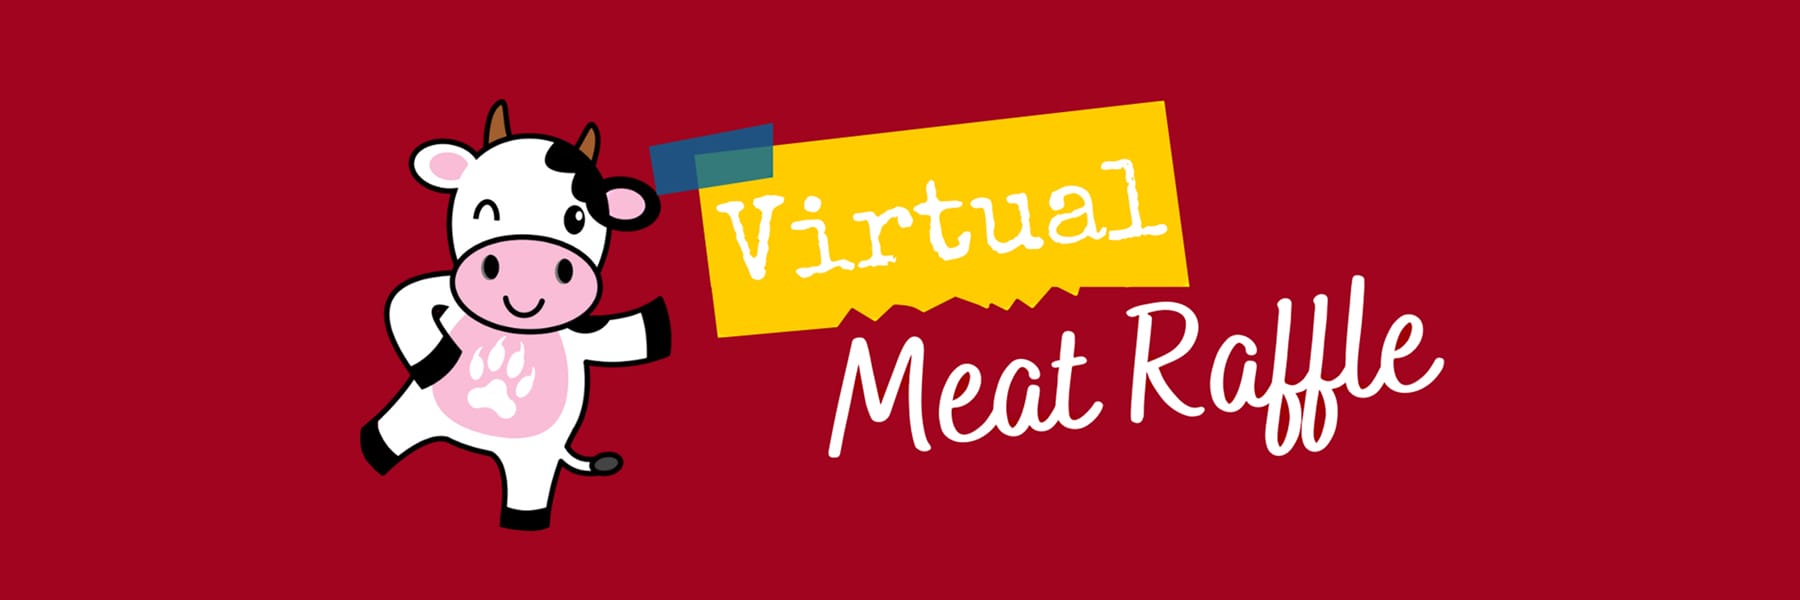 SUNY Niagara Alumni Association to Host Virtual Meat Raffle